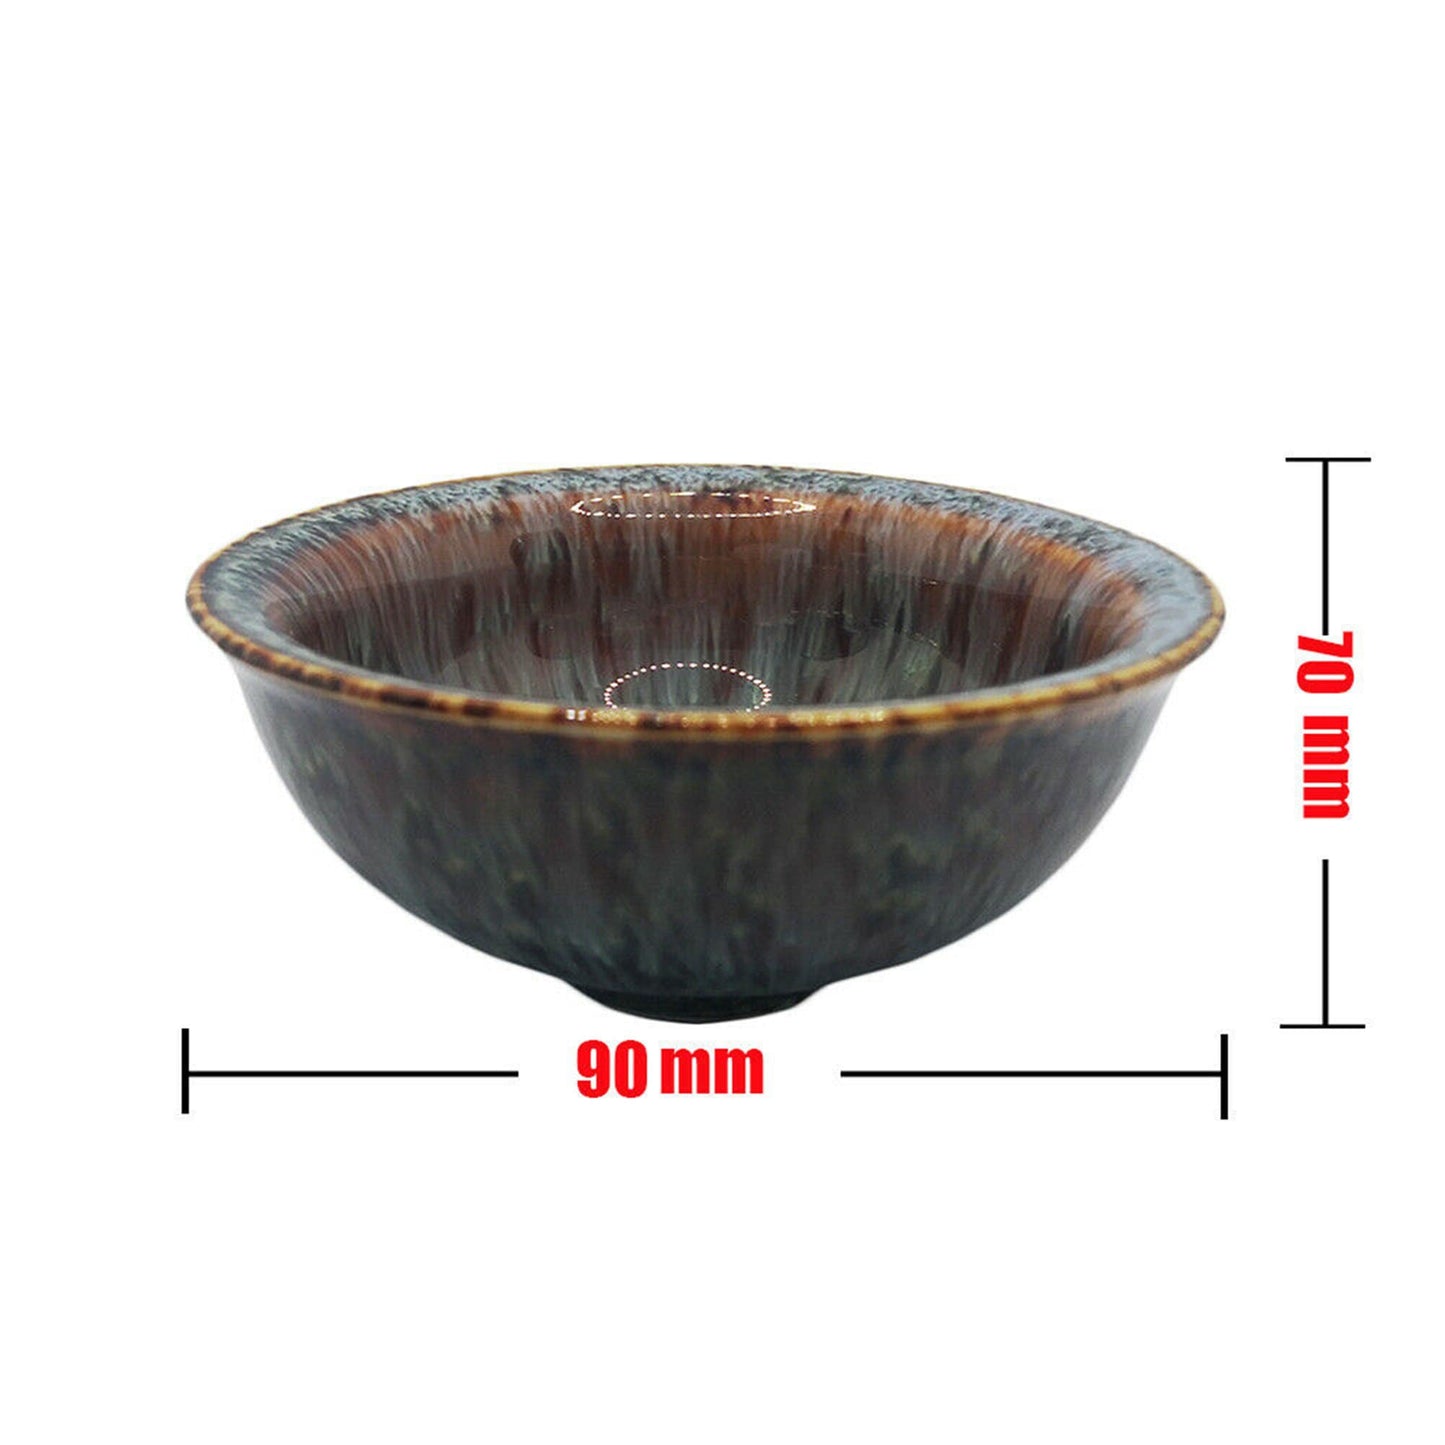 007-JianZhan Chinese Tea Cups  Handcrafted Tenmoku Tea Cup Ceramic Teacup Mug matcha Tenmoku bowl Crafts Collection|Father's Day Gift